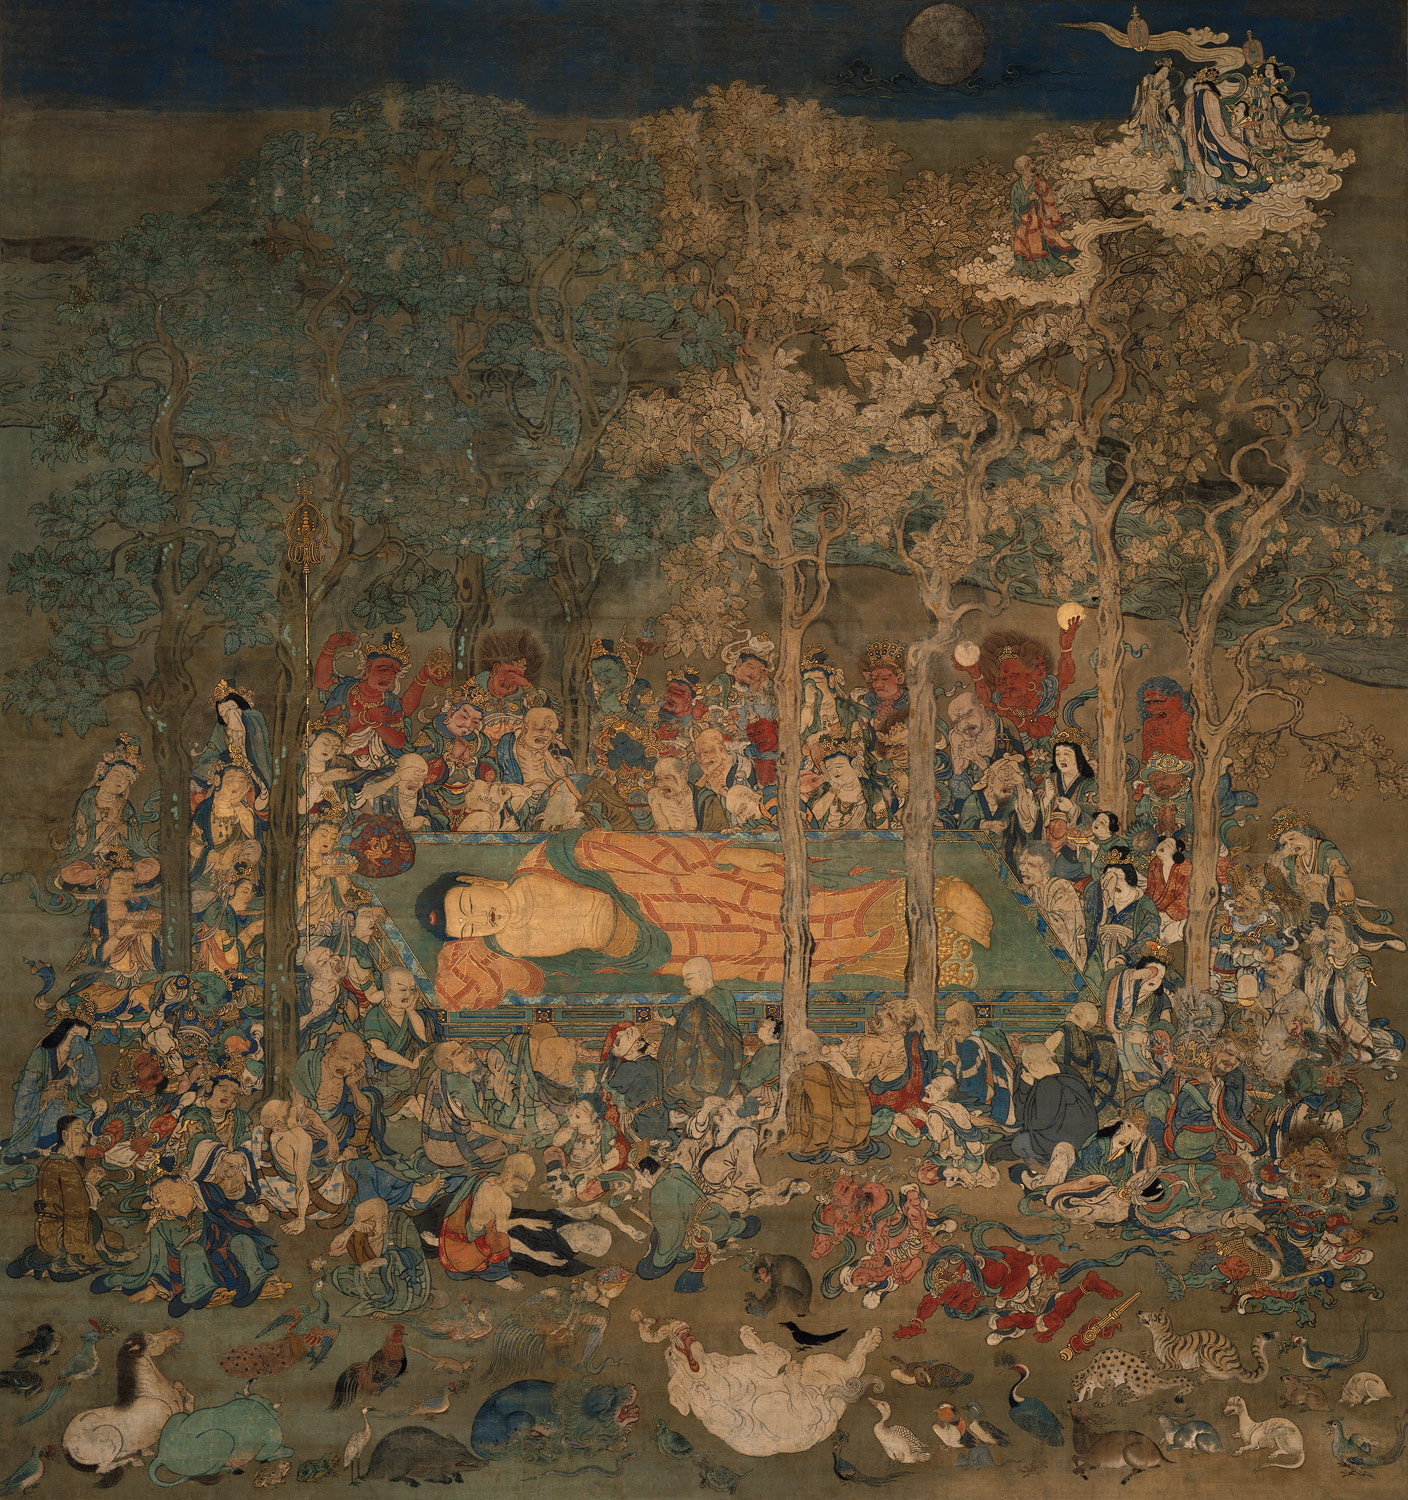 Death of Buddha (Parinirvana)